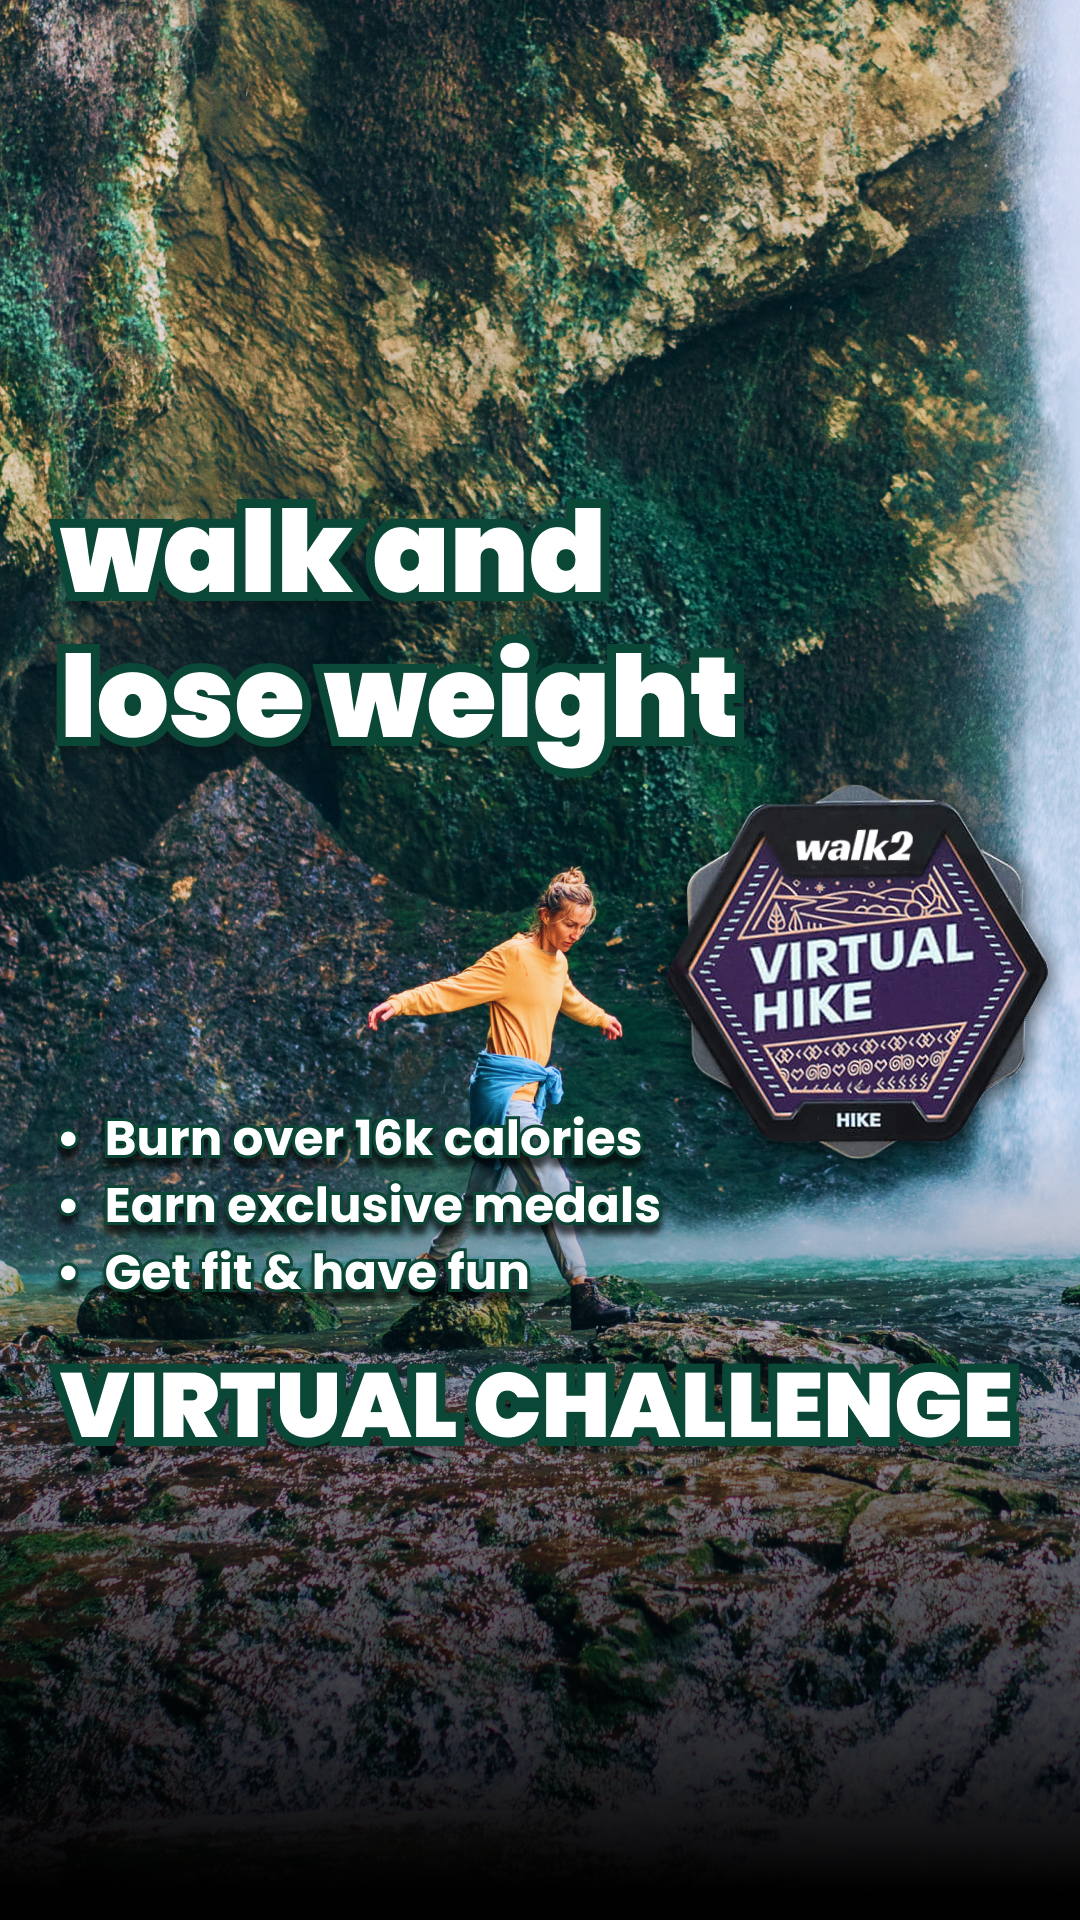 walk2-Review WALK AND LOSE 12